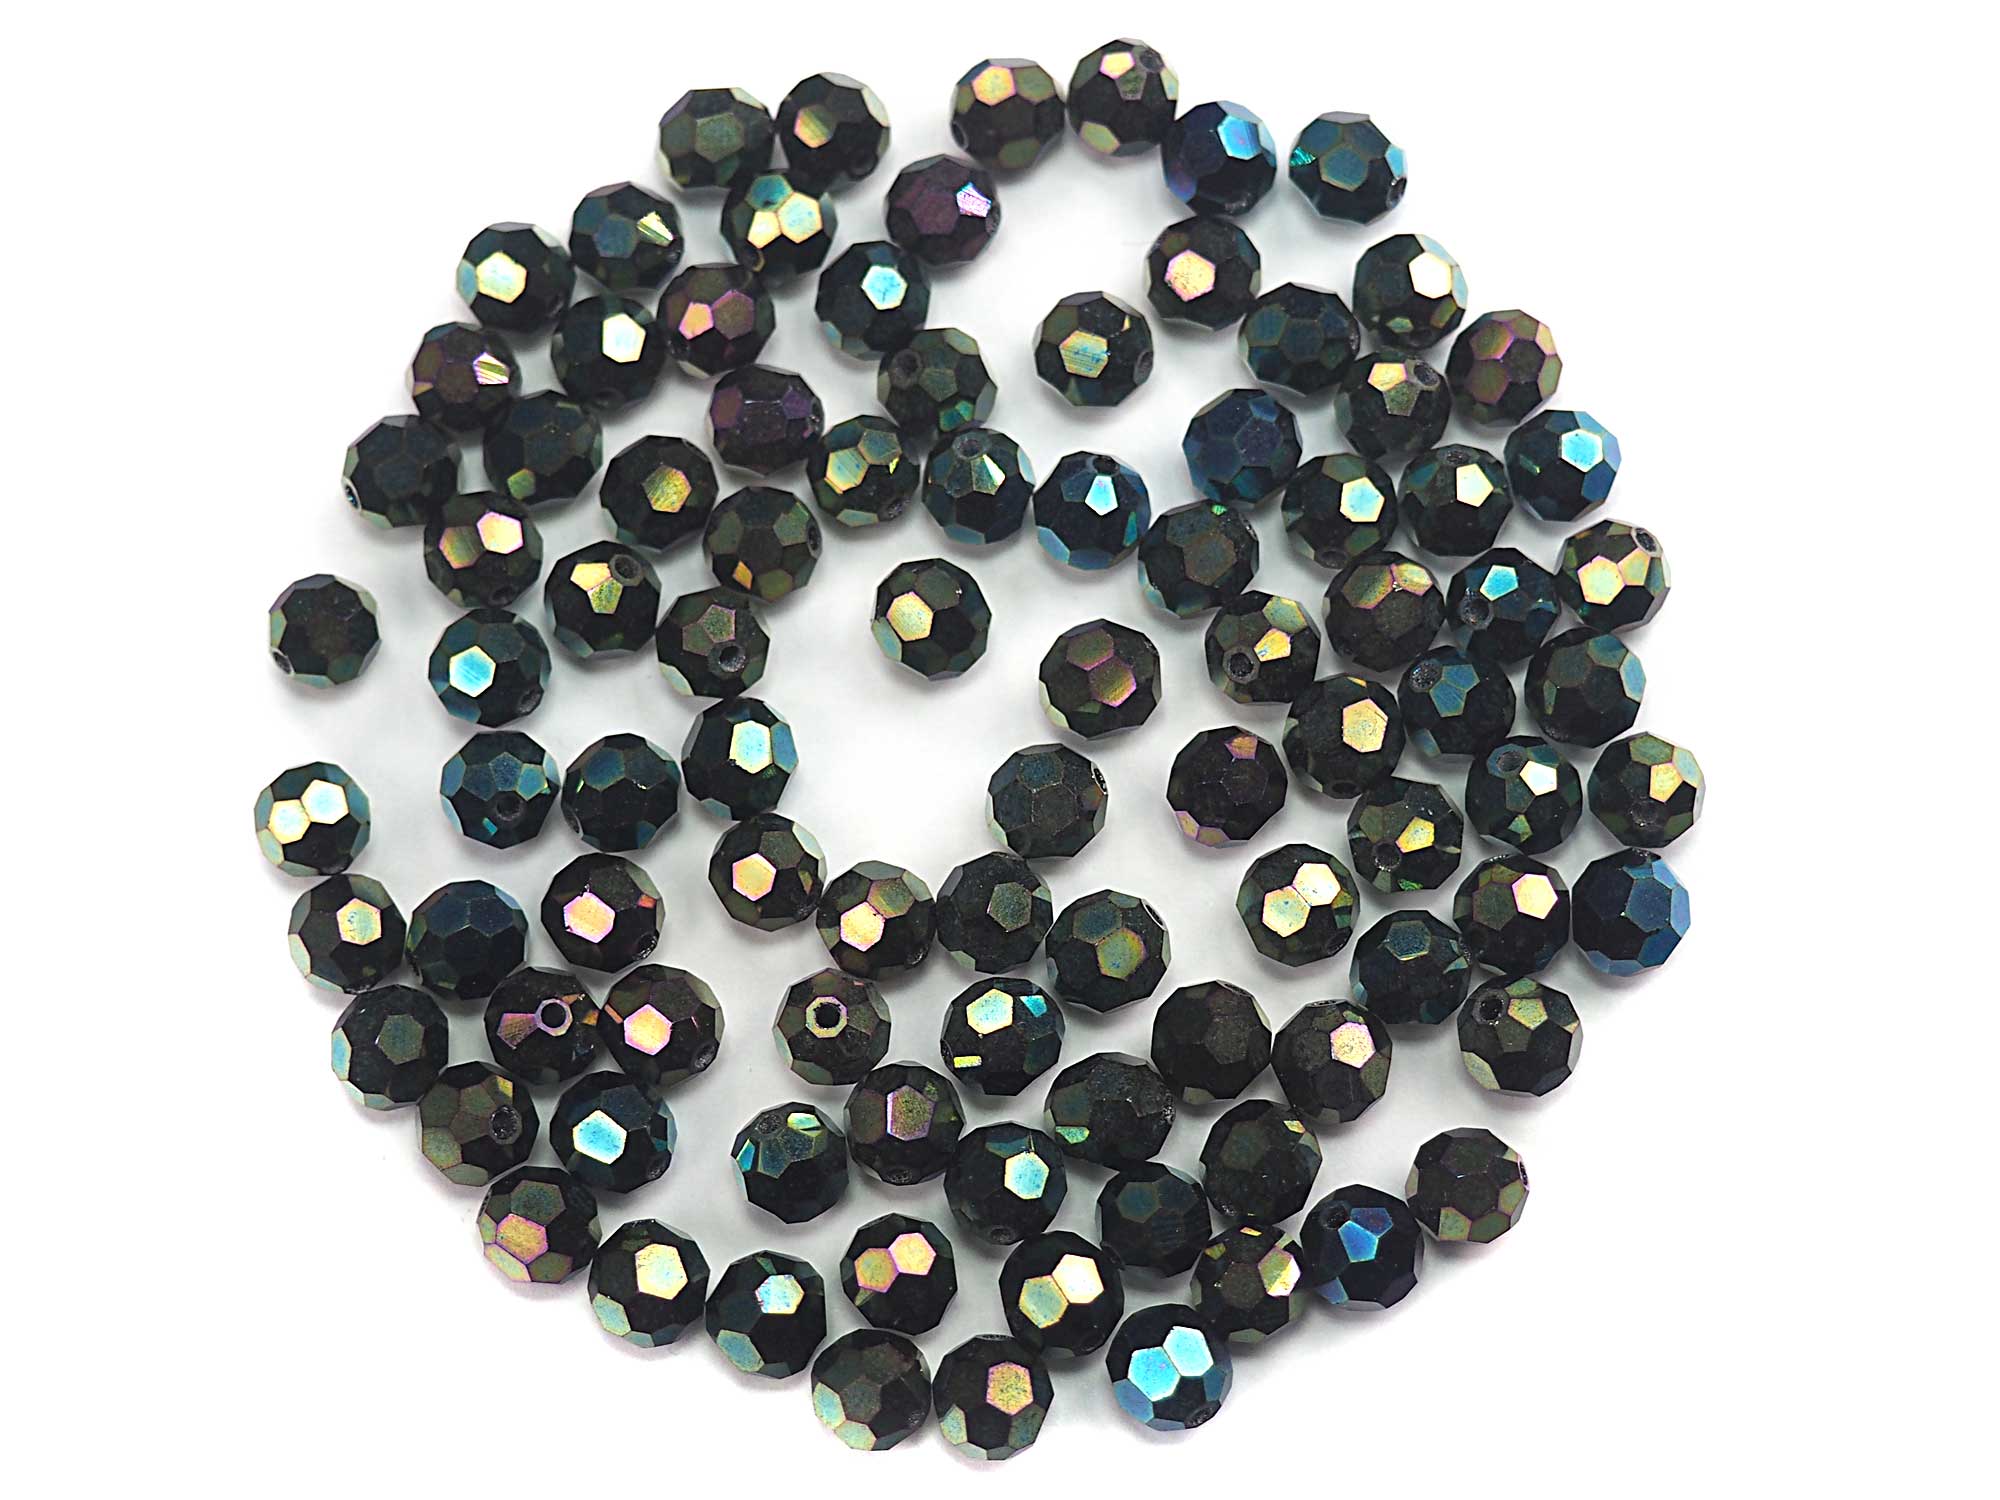 Jet Green Iris fully coated (#59155), Czech Machine Cut Round Crystal Beads